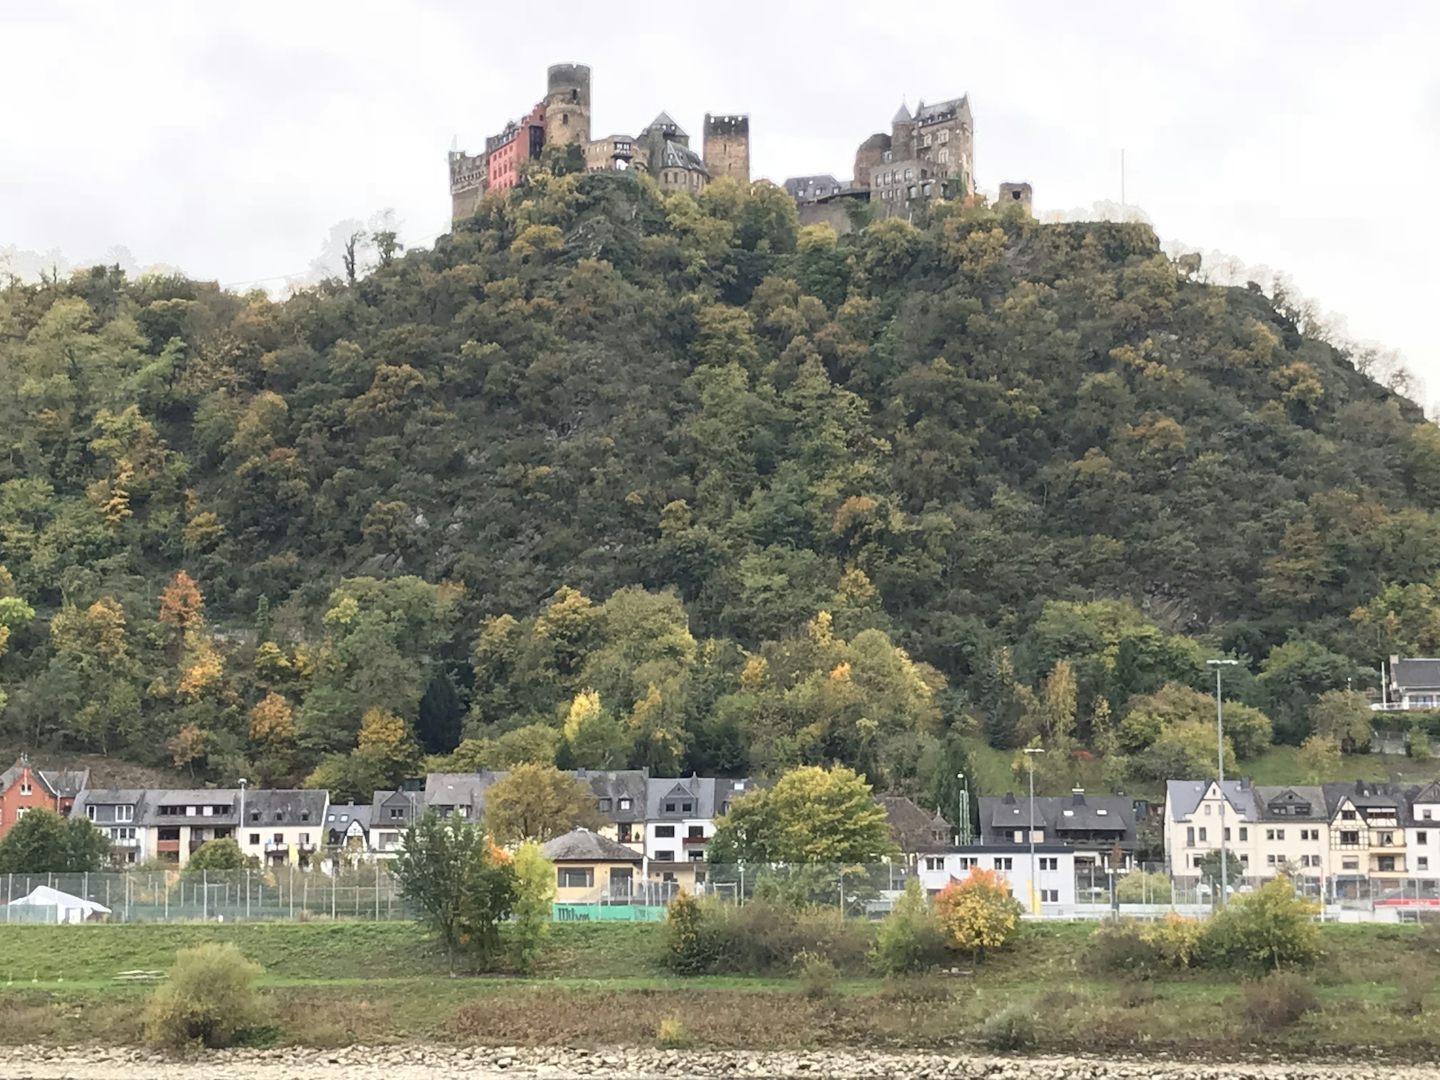 Castle along the Rhine River